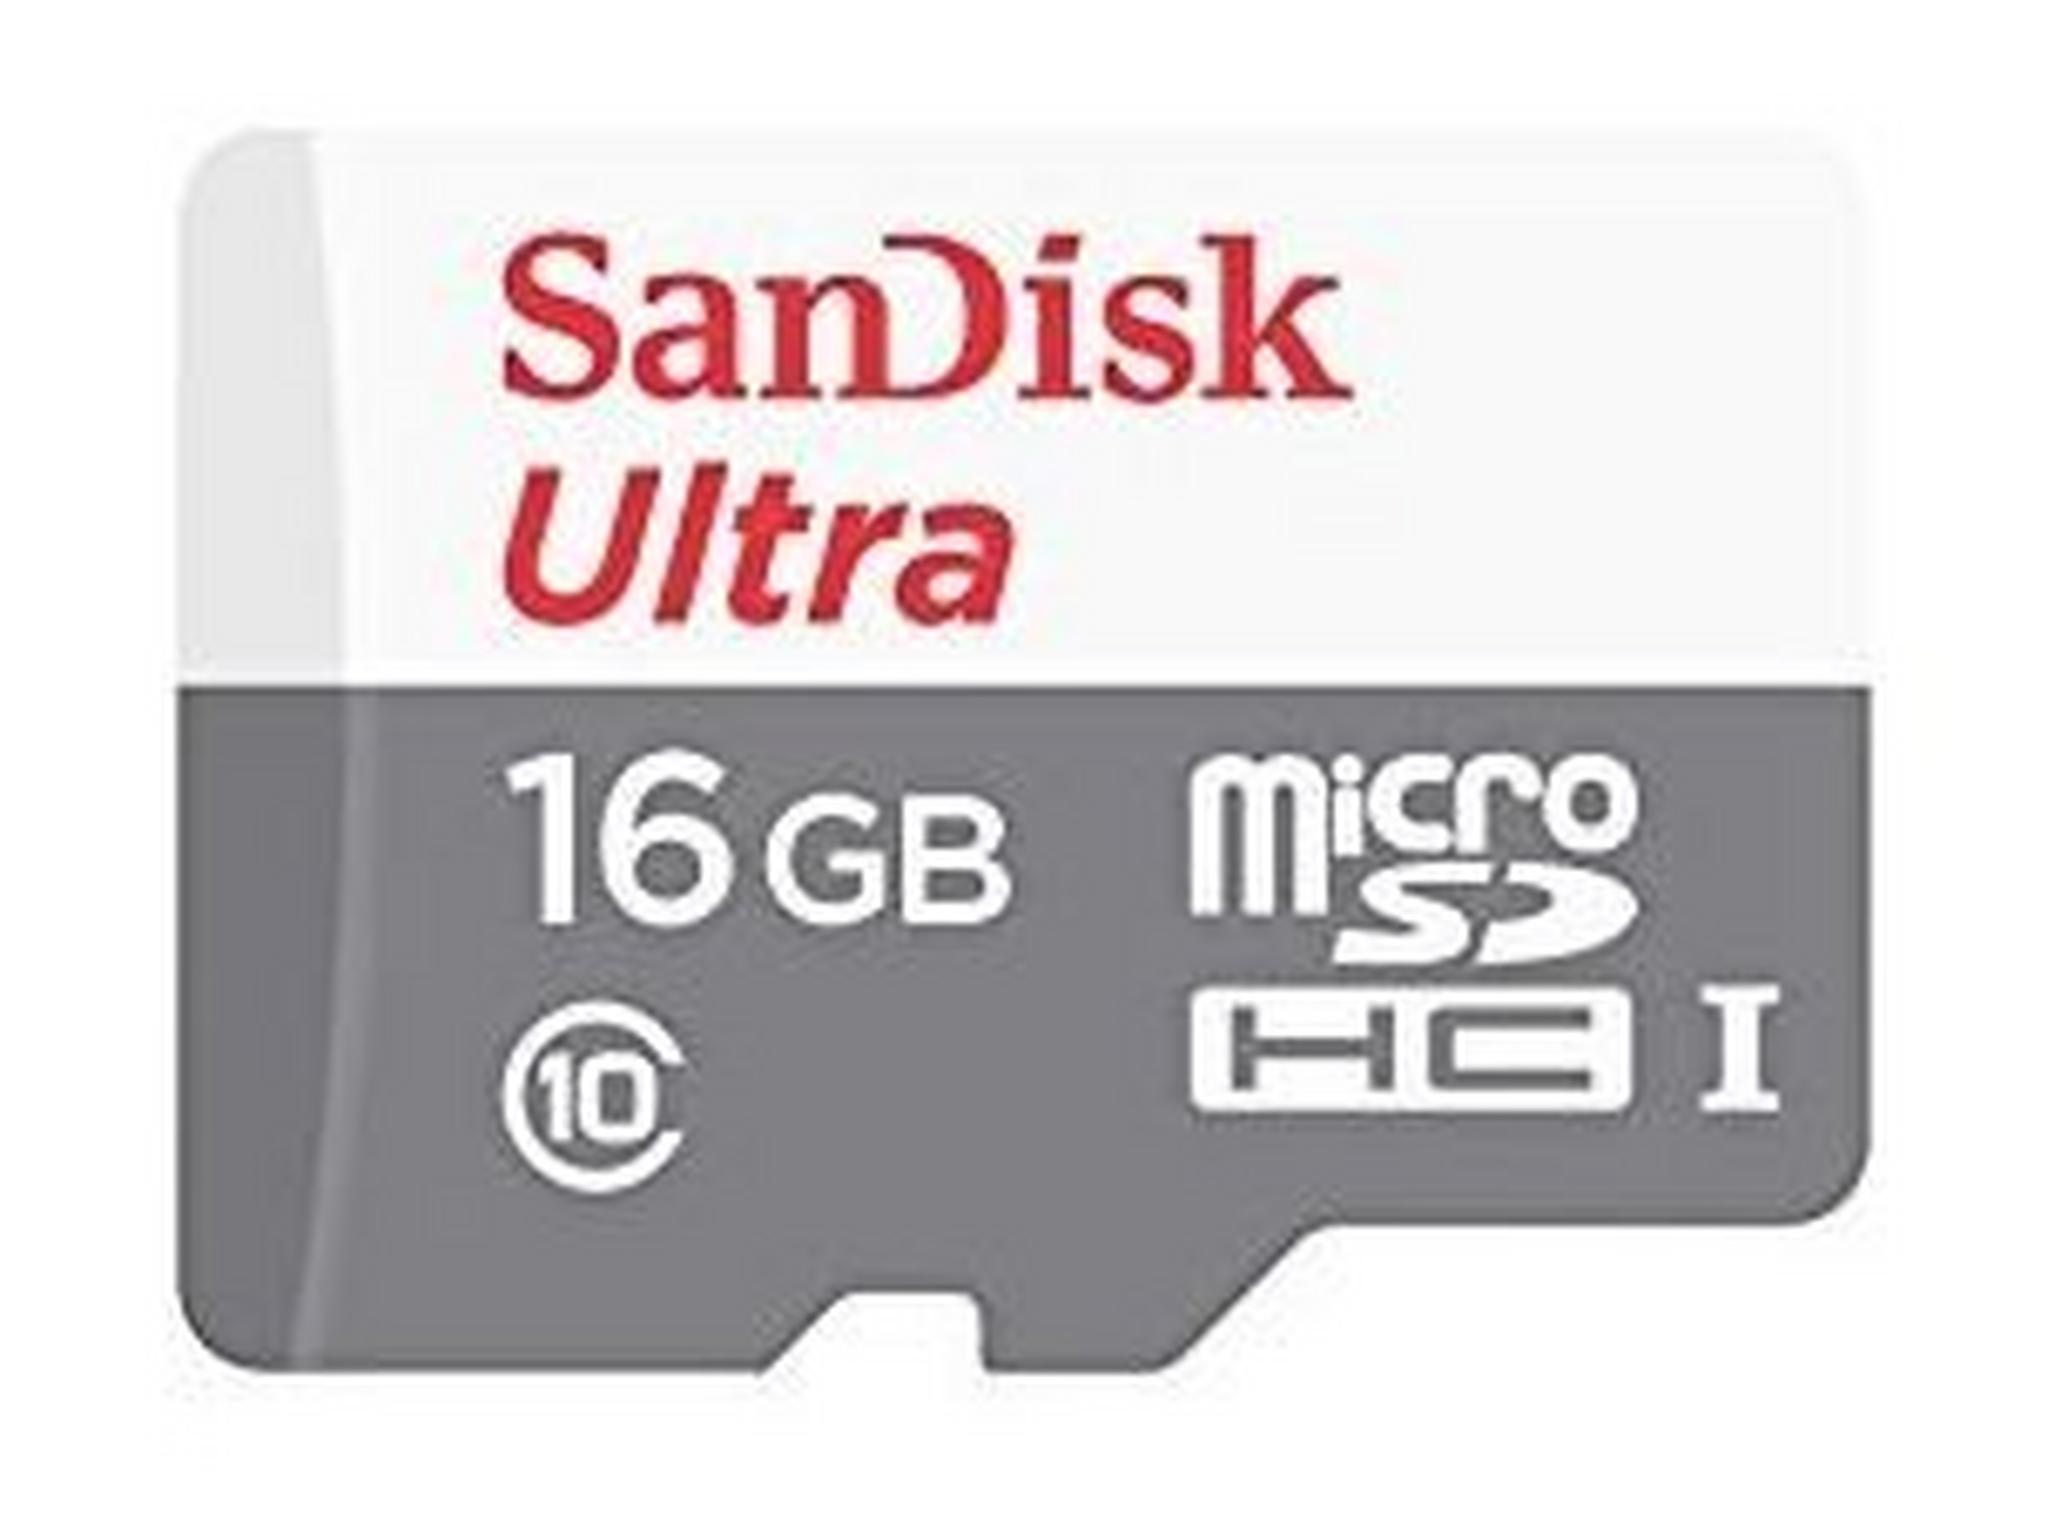 SanDisk Ultra UHS-I 16GB MicroSD 80Mb/s Class 10 Card